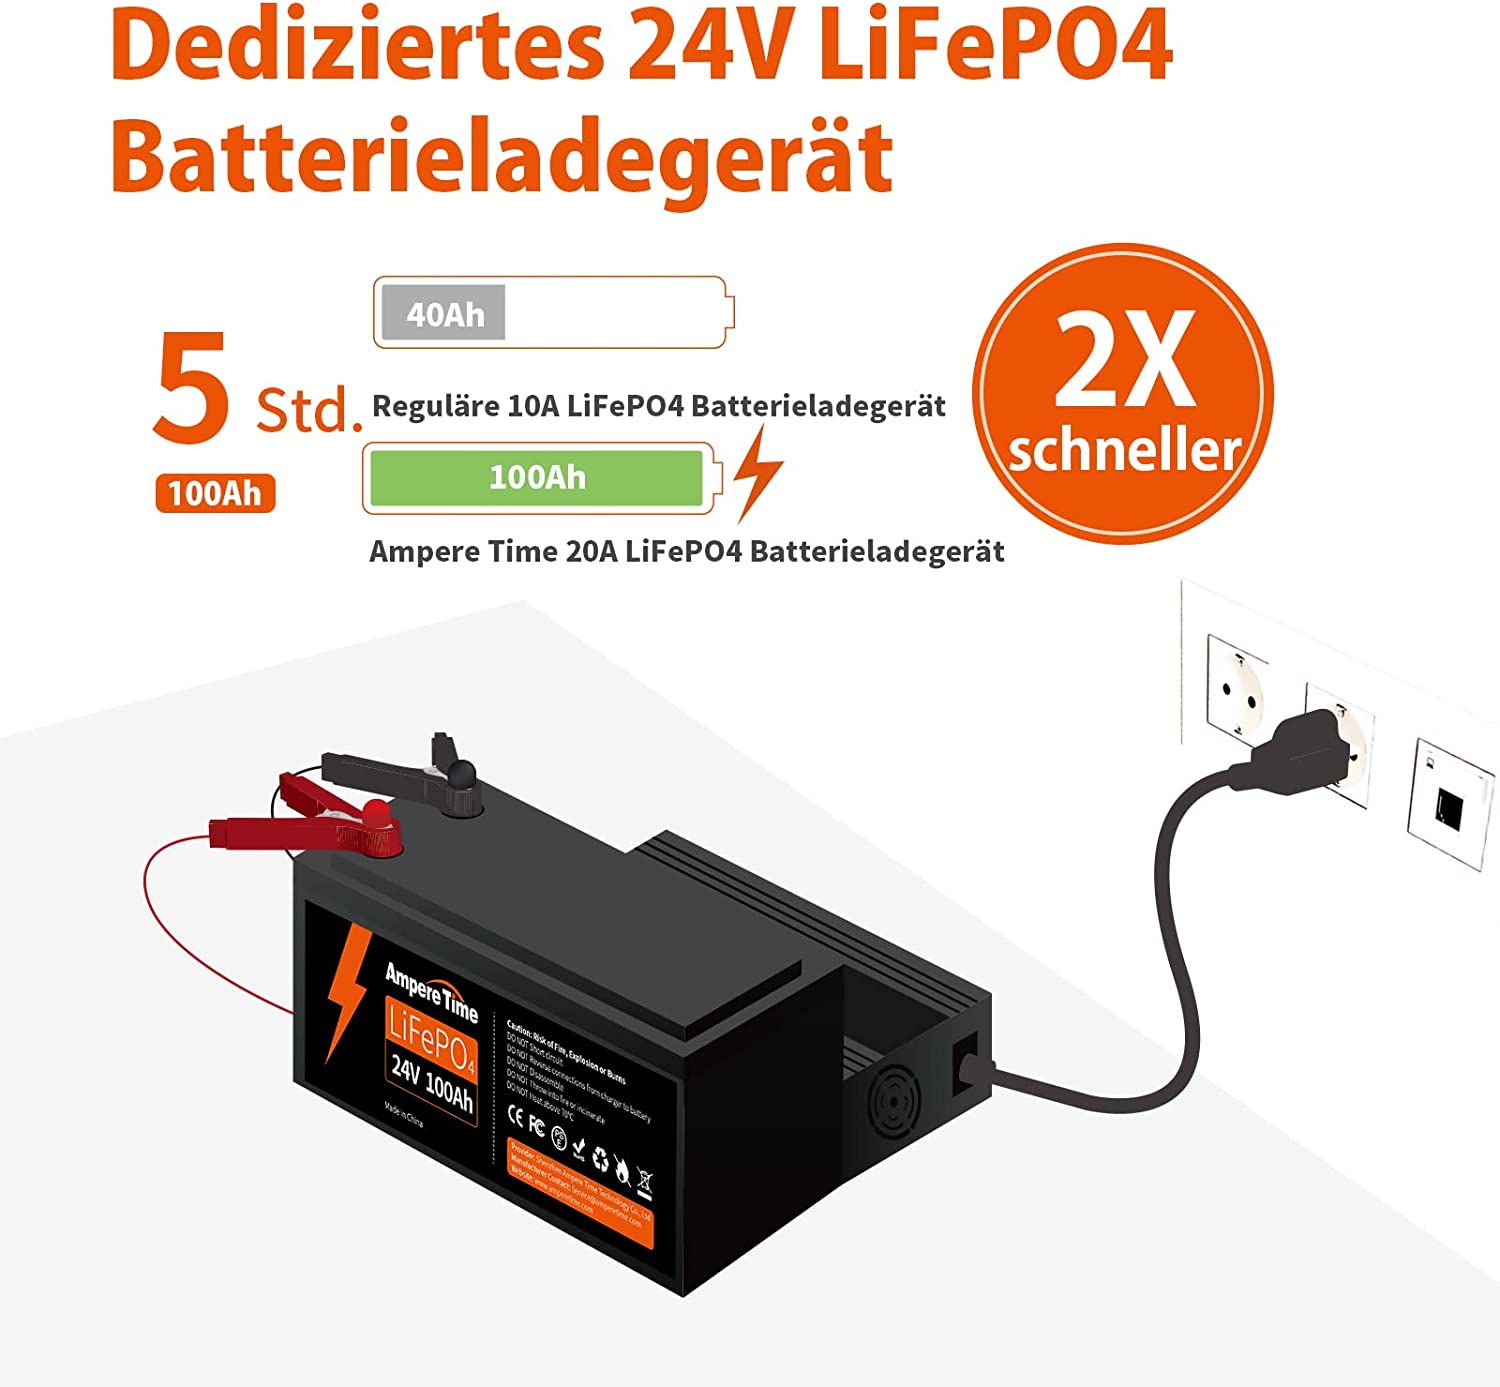 Ampere Time 29.2V 20A LiFePO4 Batterieladegerät lifepo4 ladegerät Amperetime DE